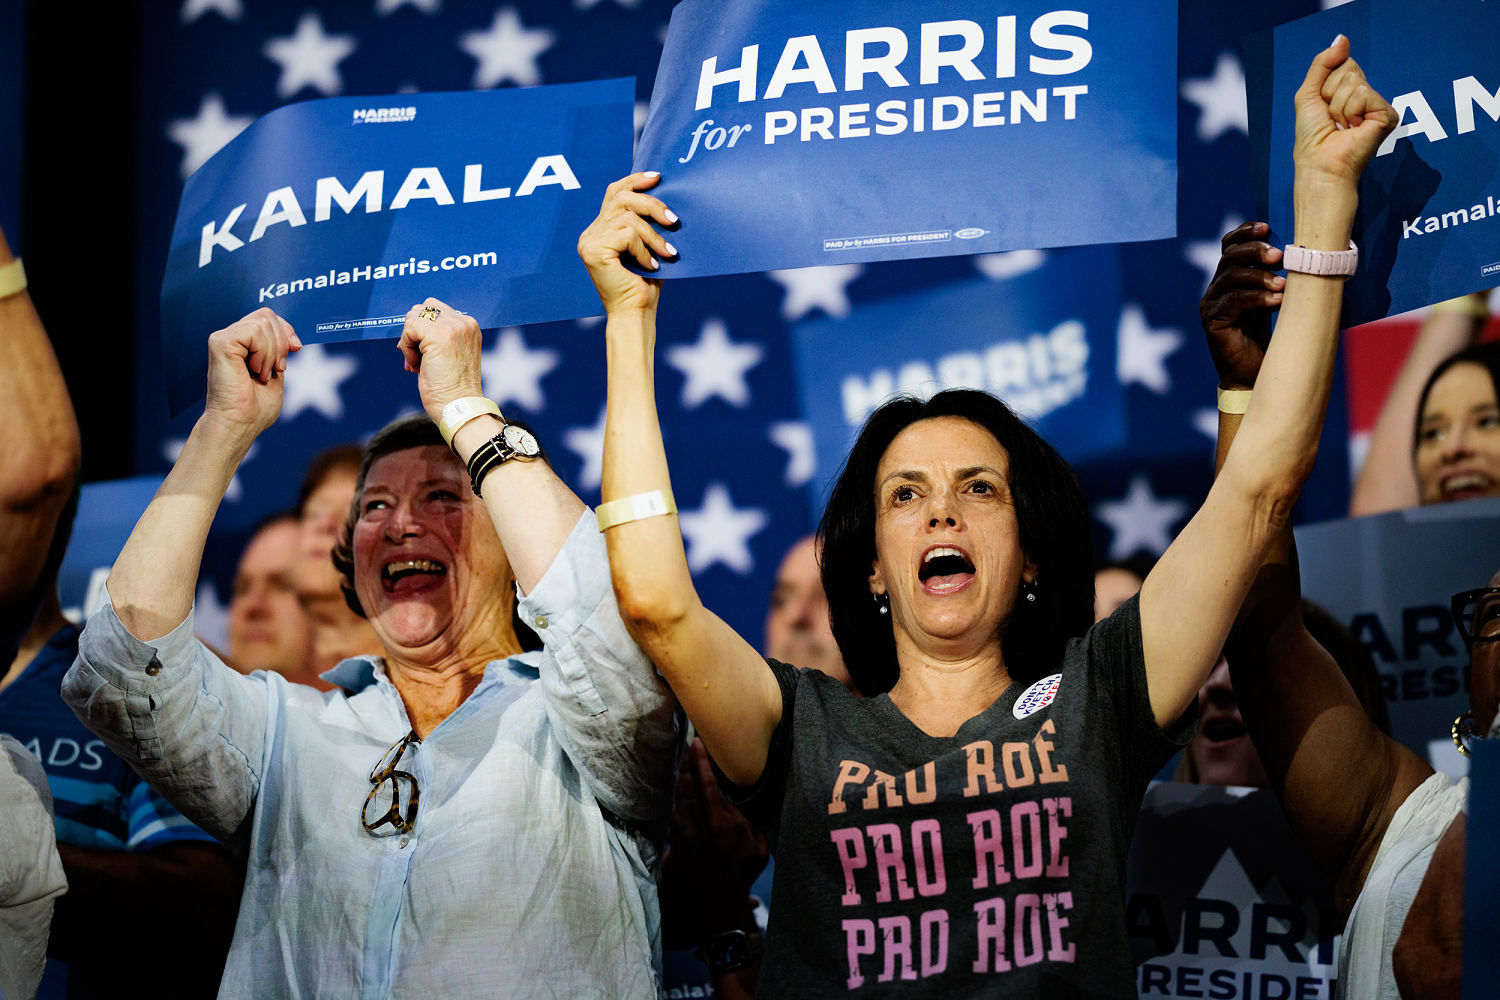 'People feel good': Georgia Democrats galvanize base ahead of Harris visit